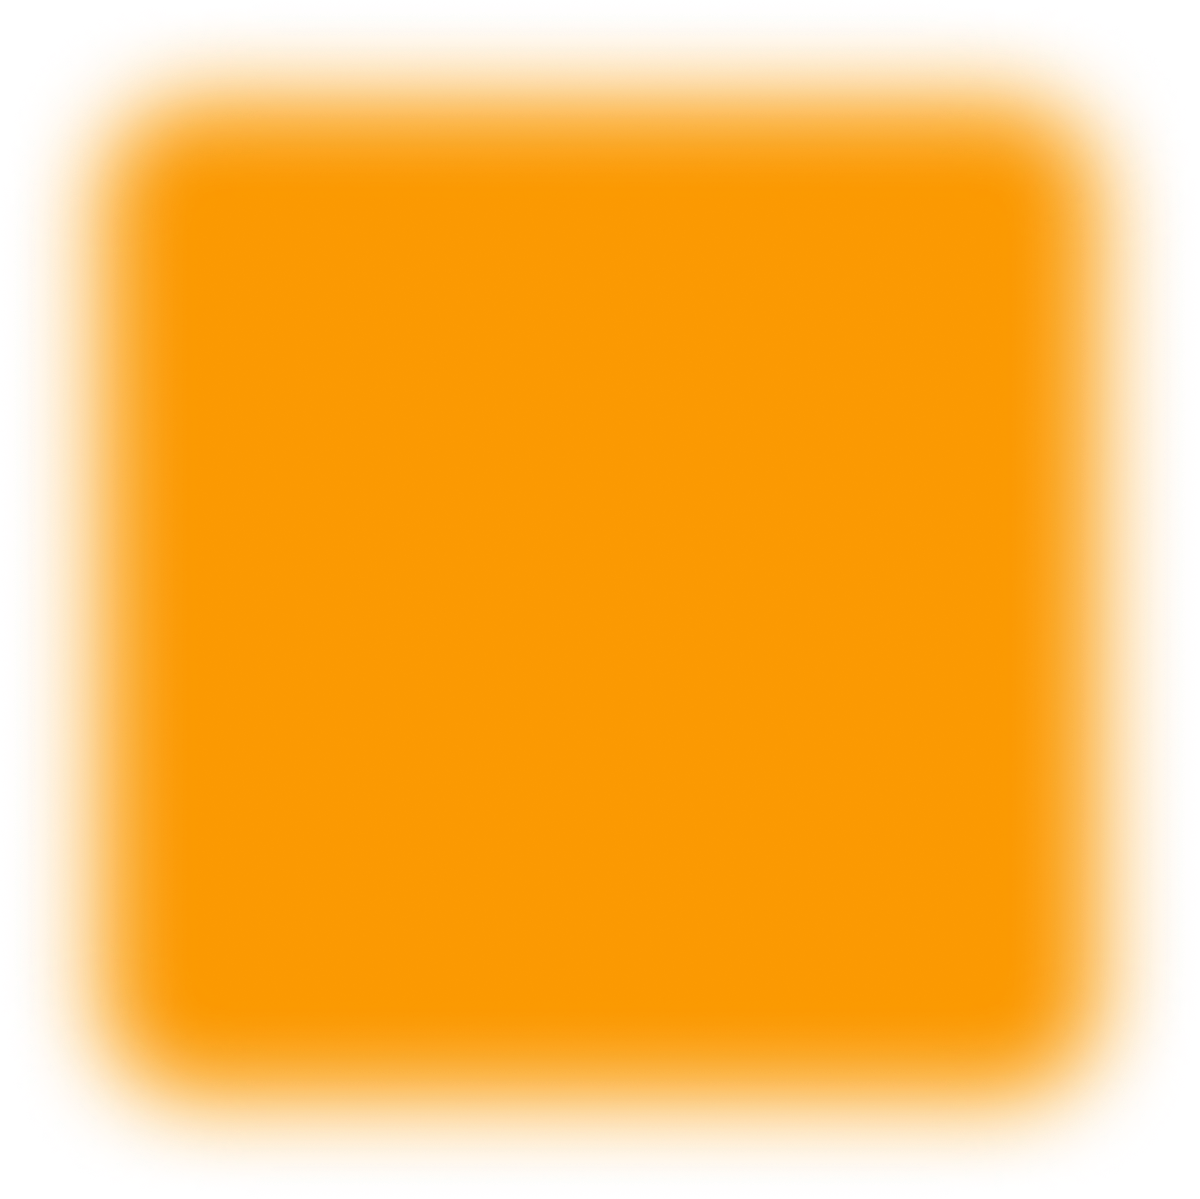 Oranye square shadow